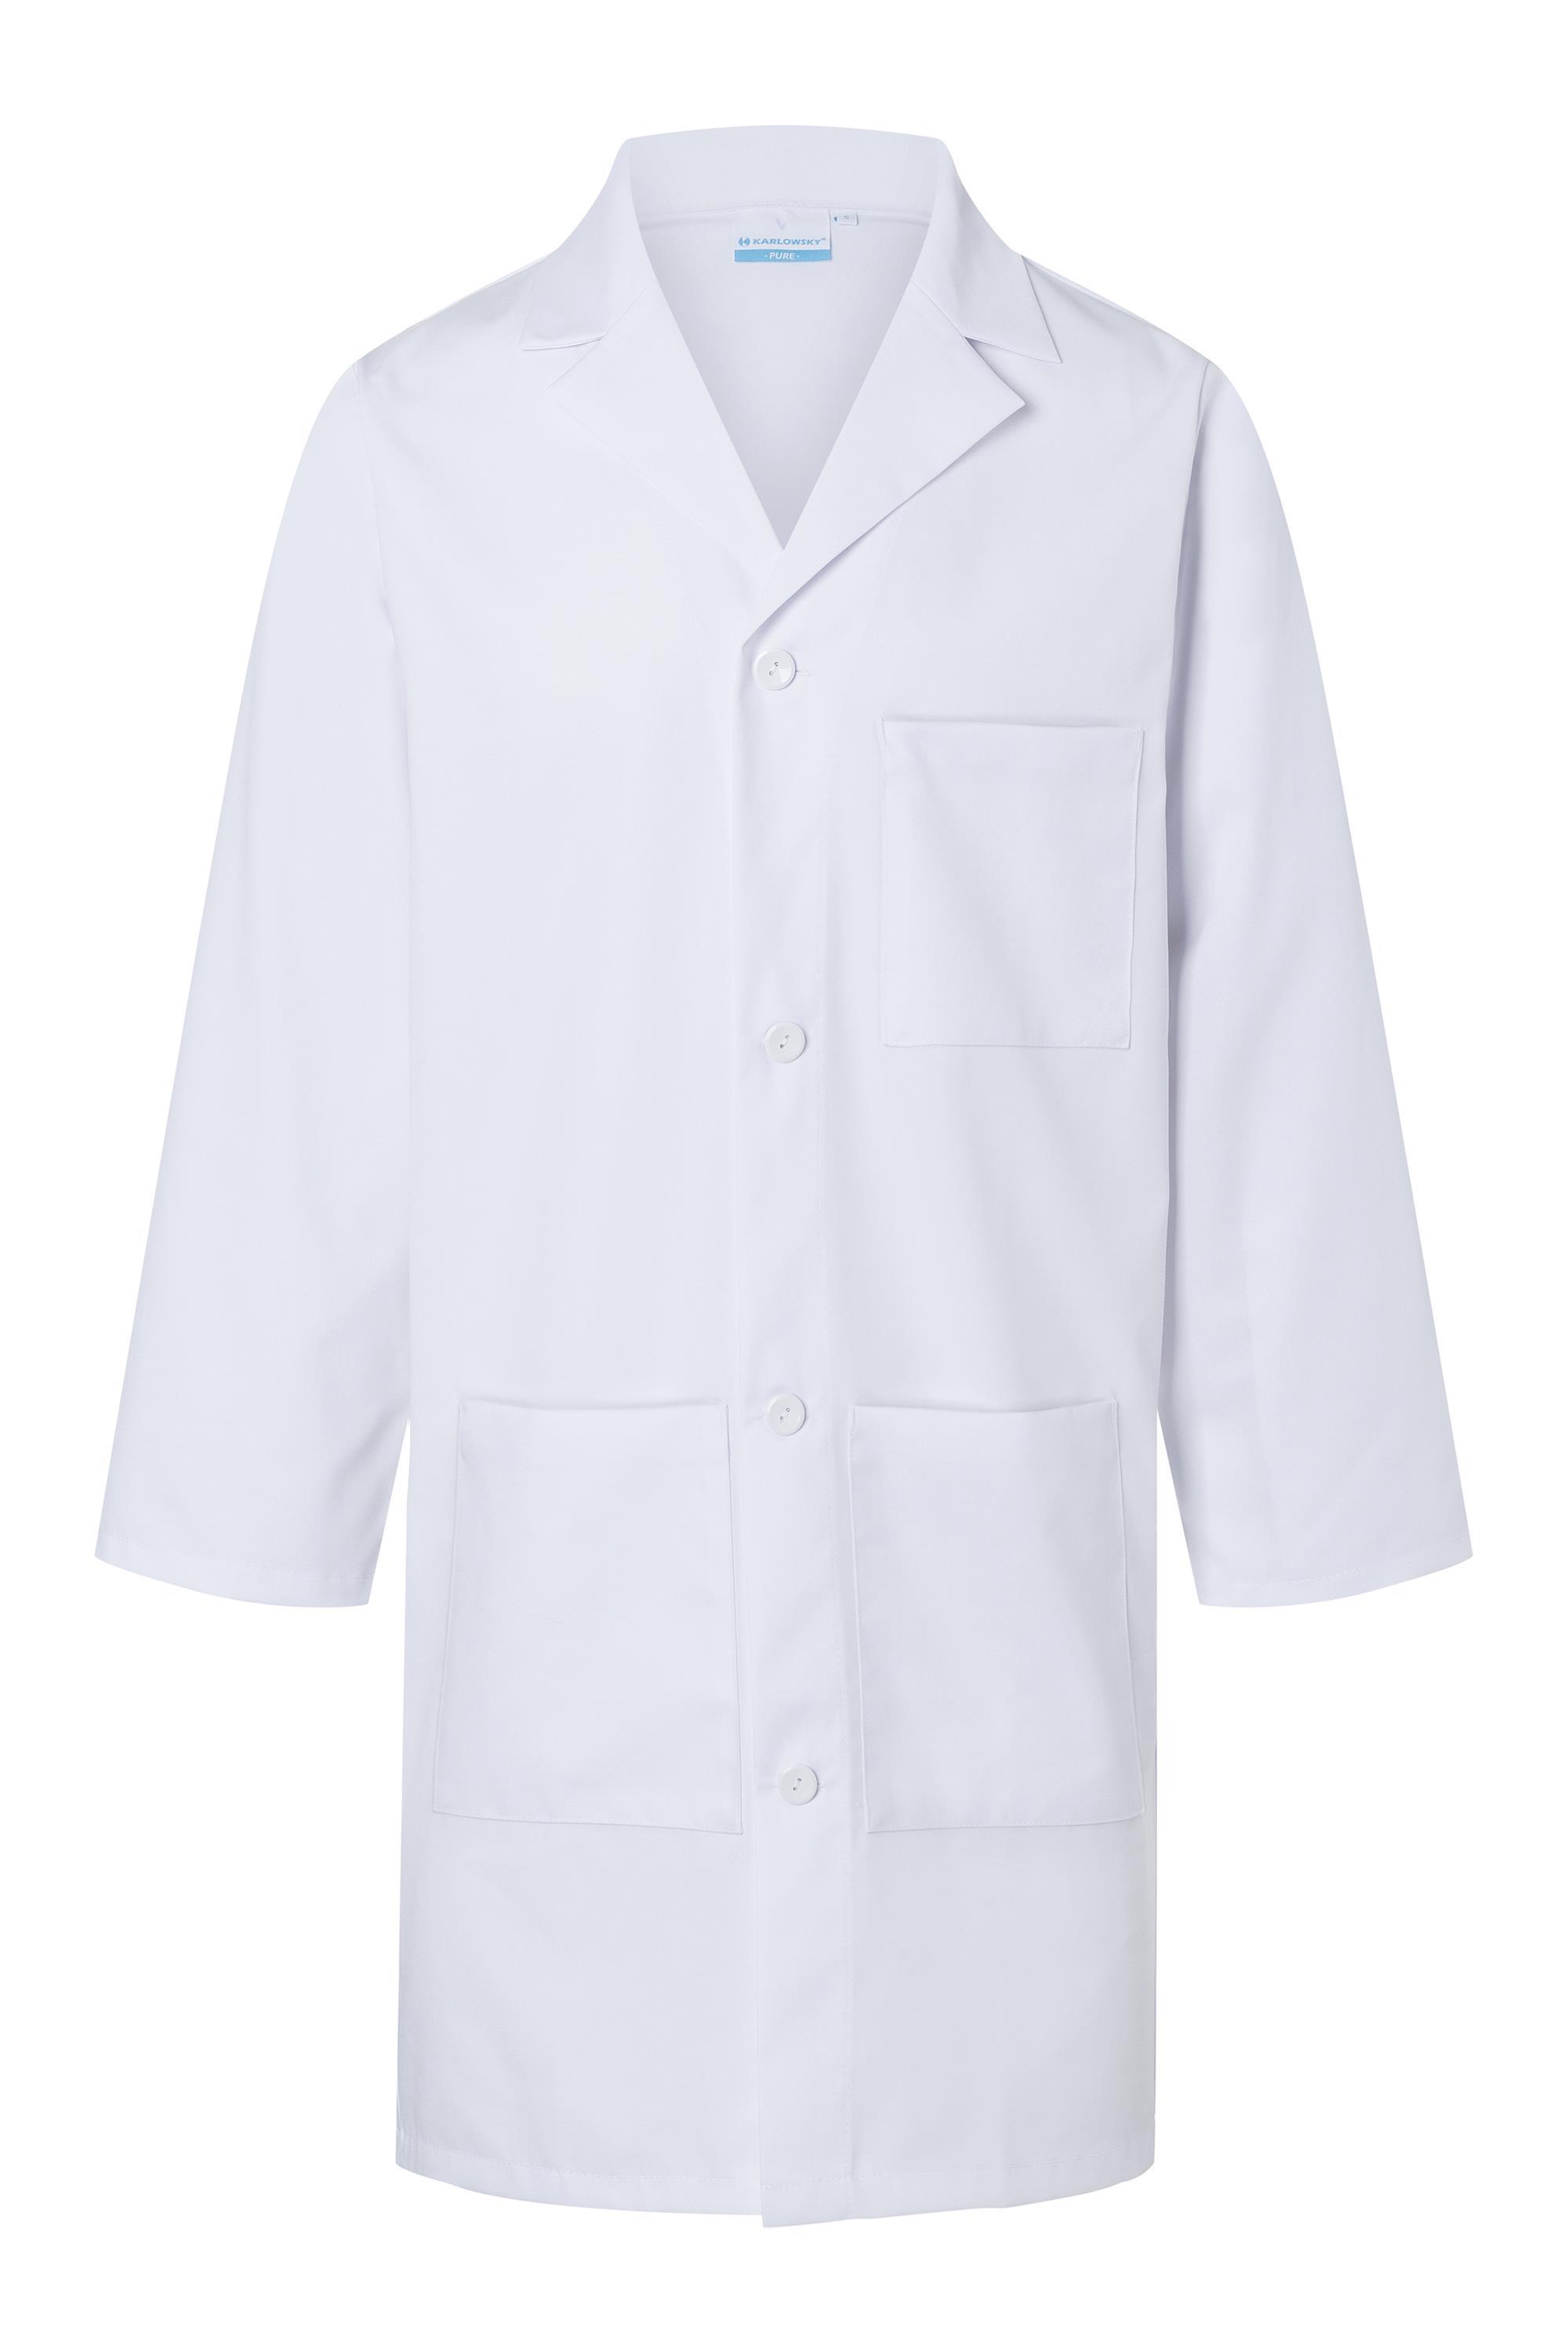 Men's lab coat mixed fabric Karlowsky®